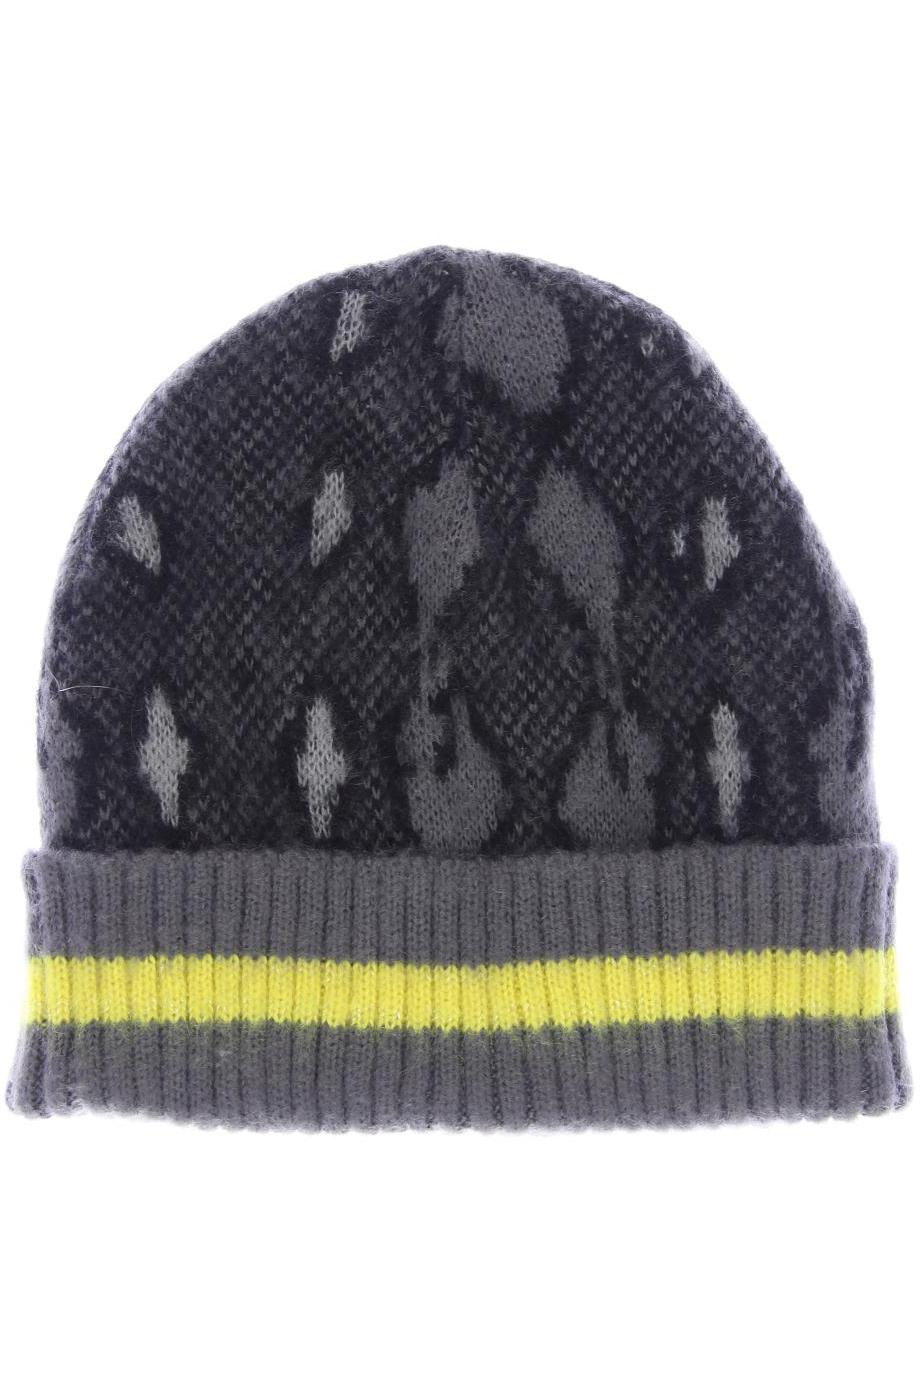 Codello Damen Hut/Mütze, grau von Codello